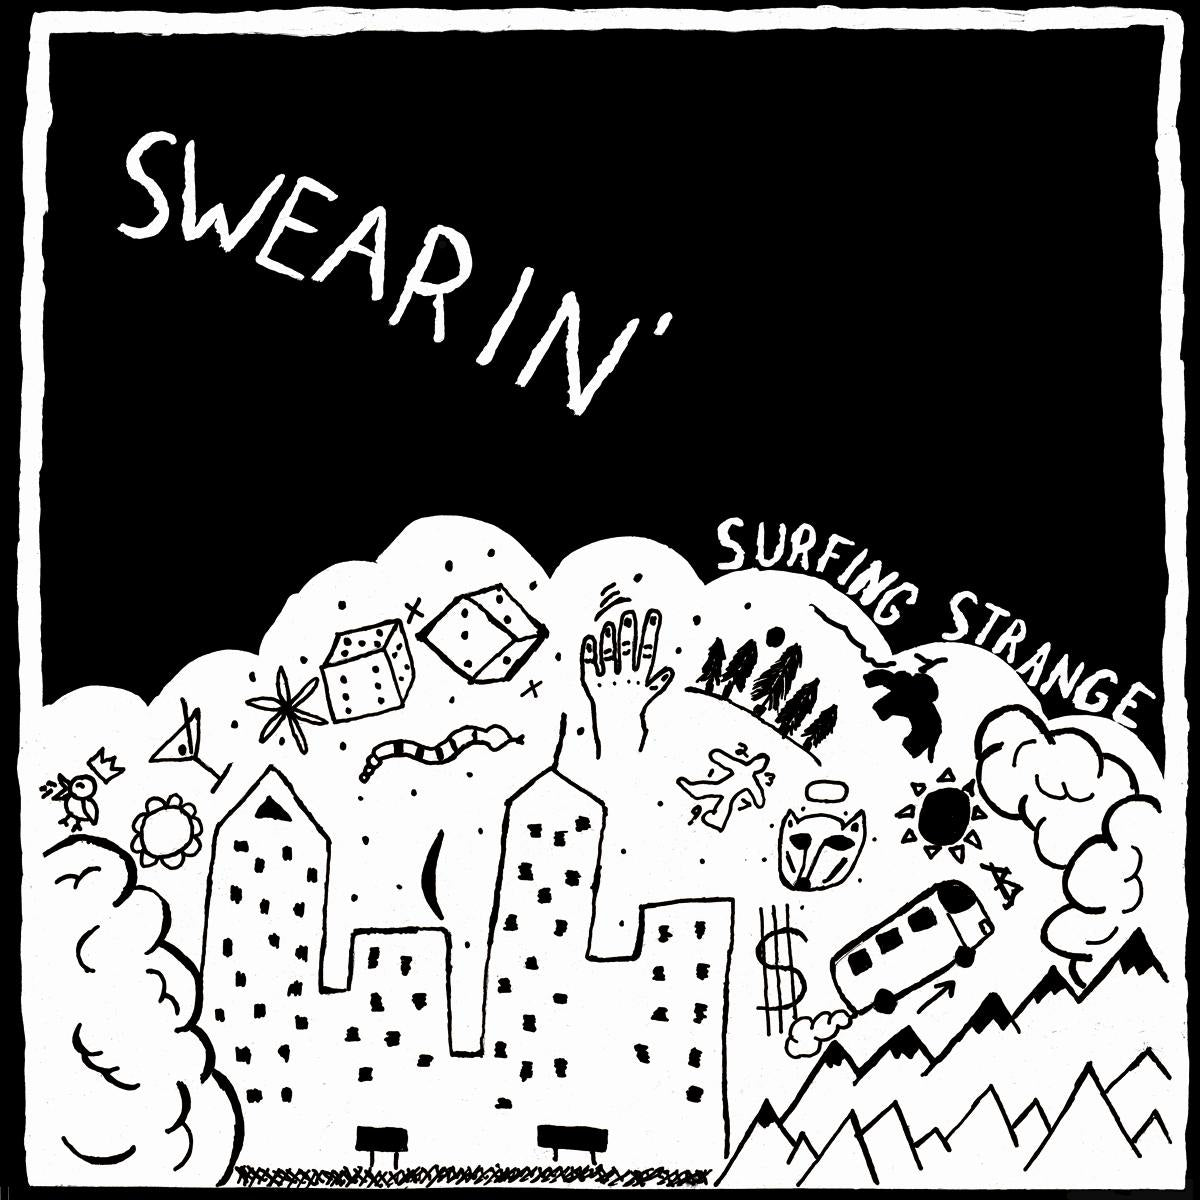 Swearin' - Surfing Strange - Vinyl - Salinas